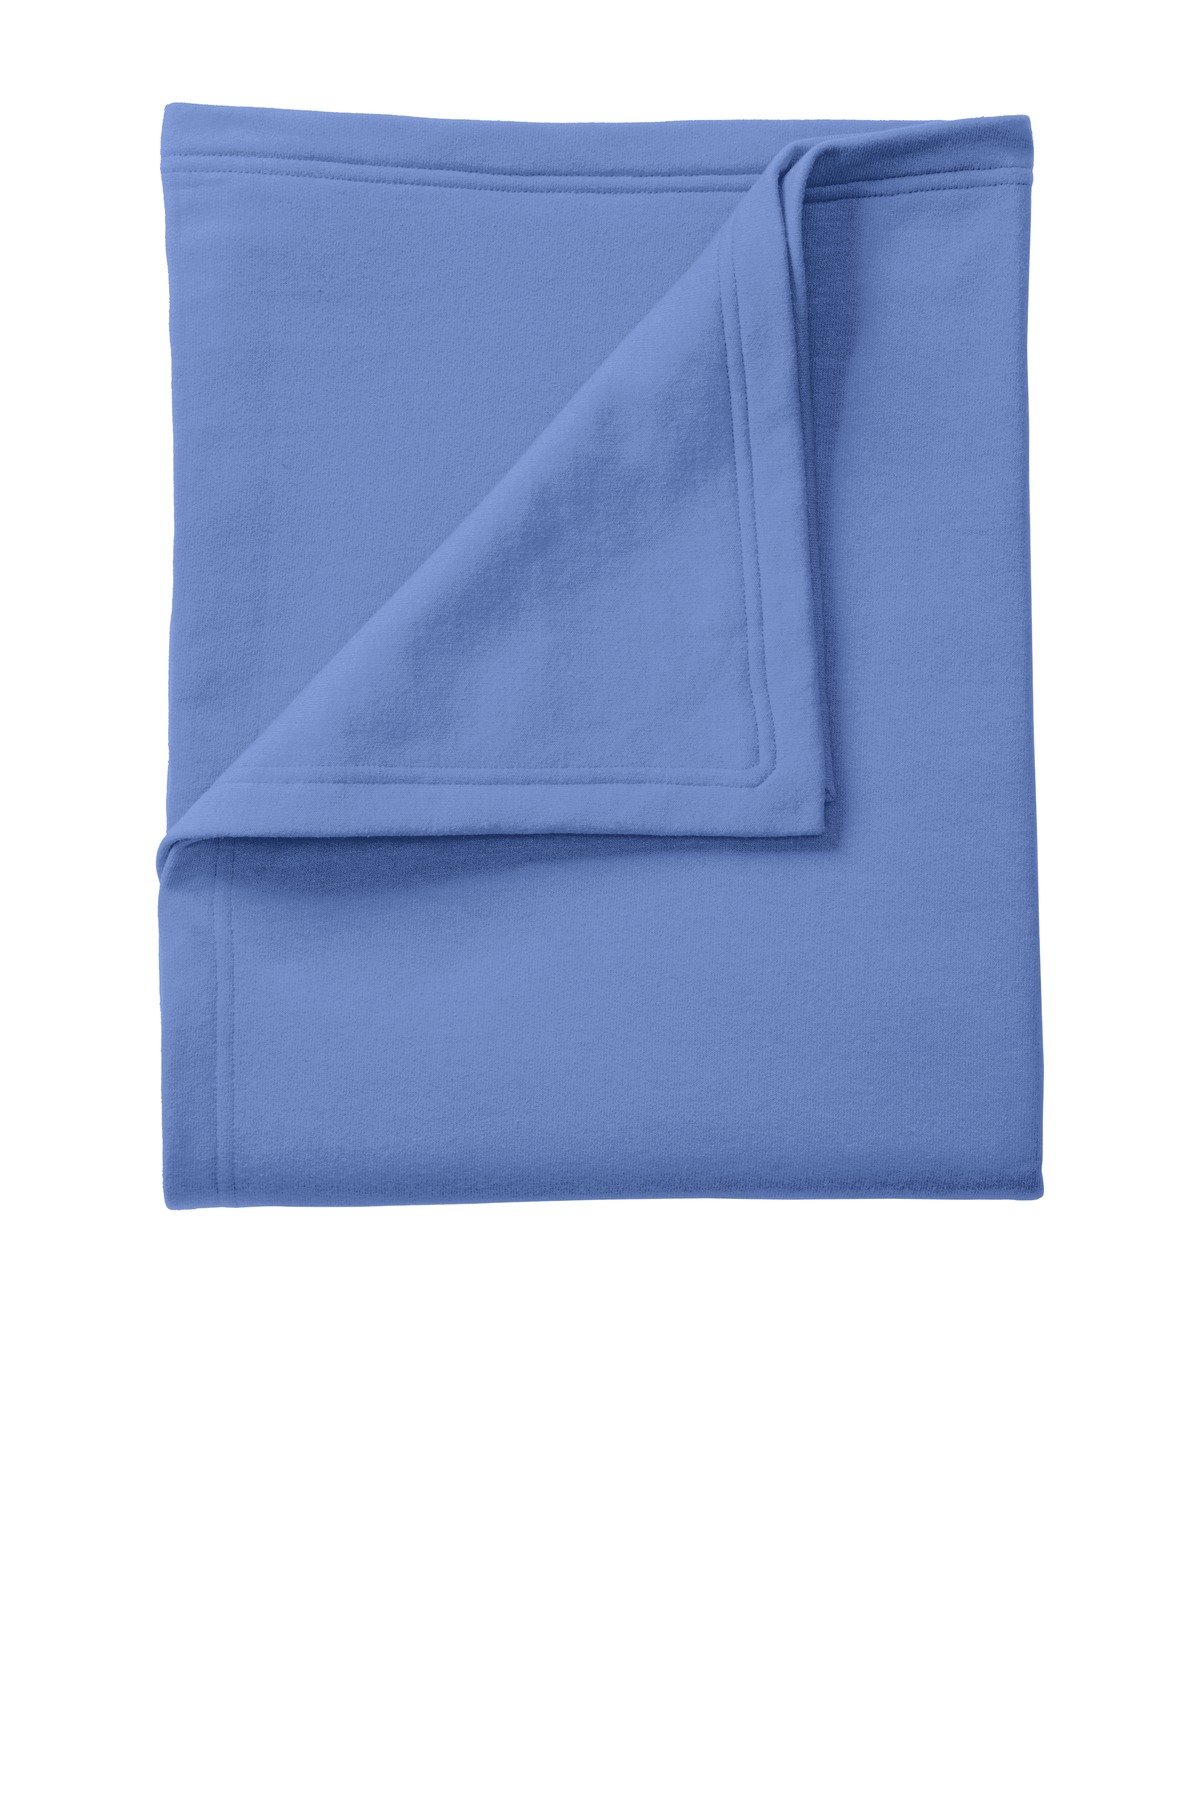 Port & Company  BP78 - Sweatshirt Blanket